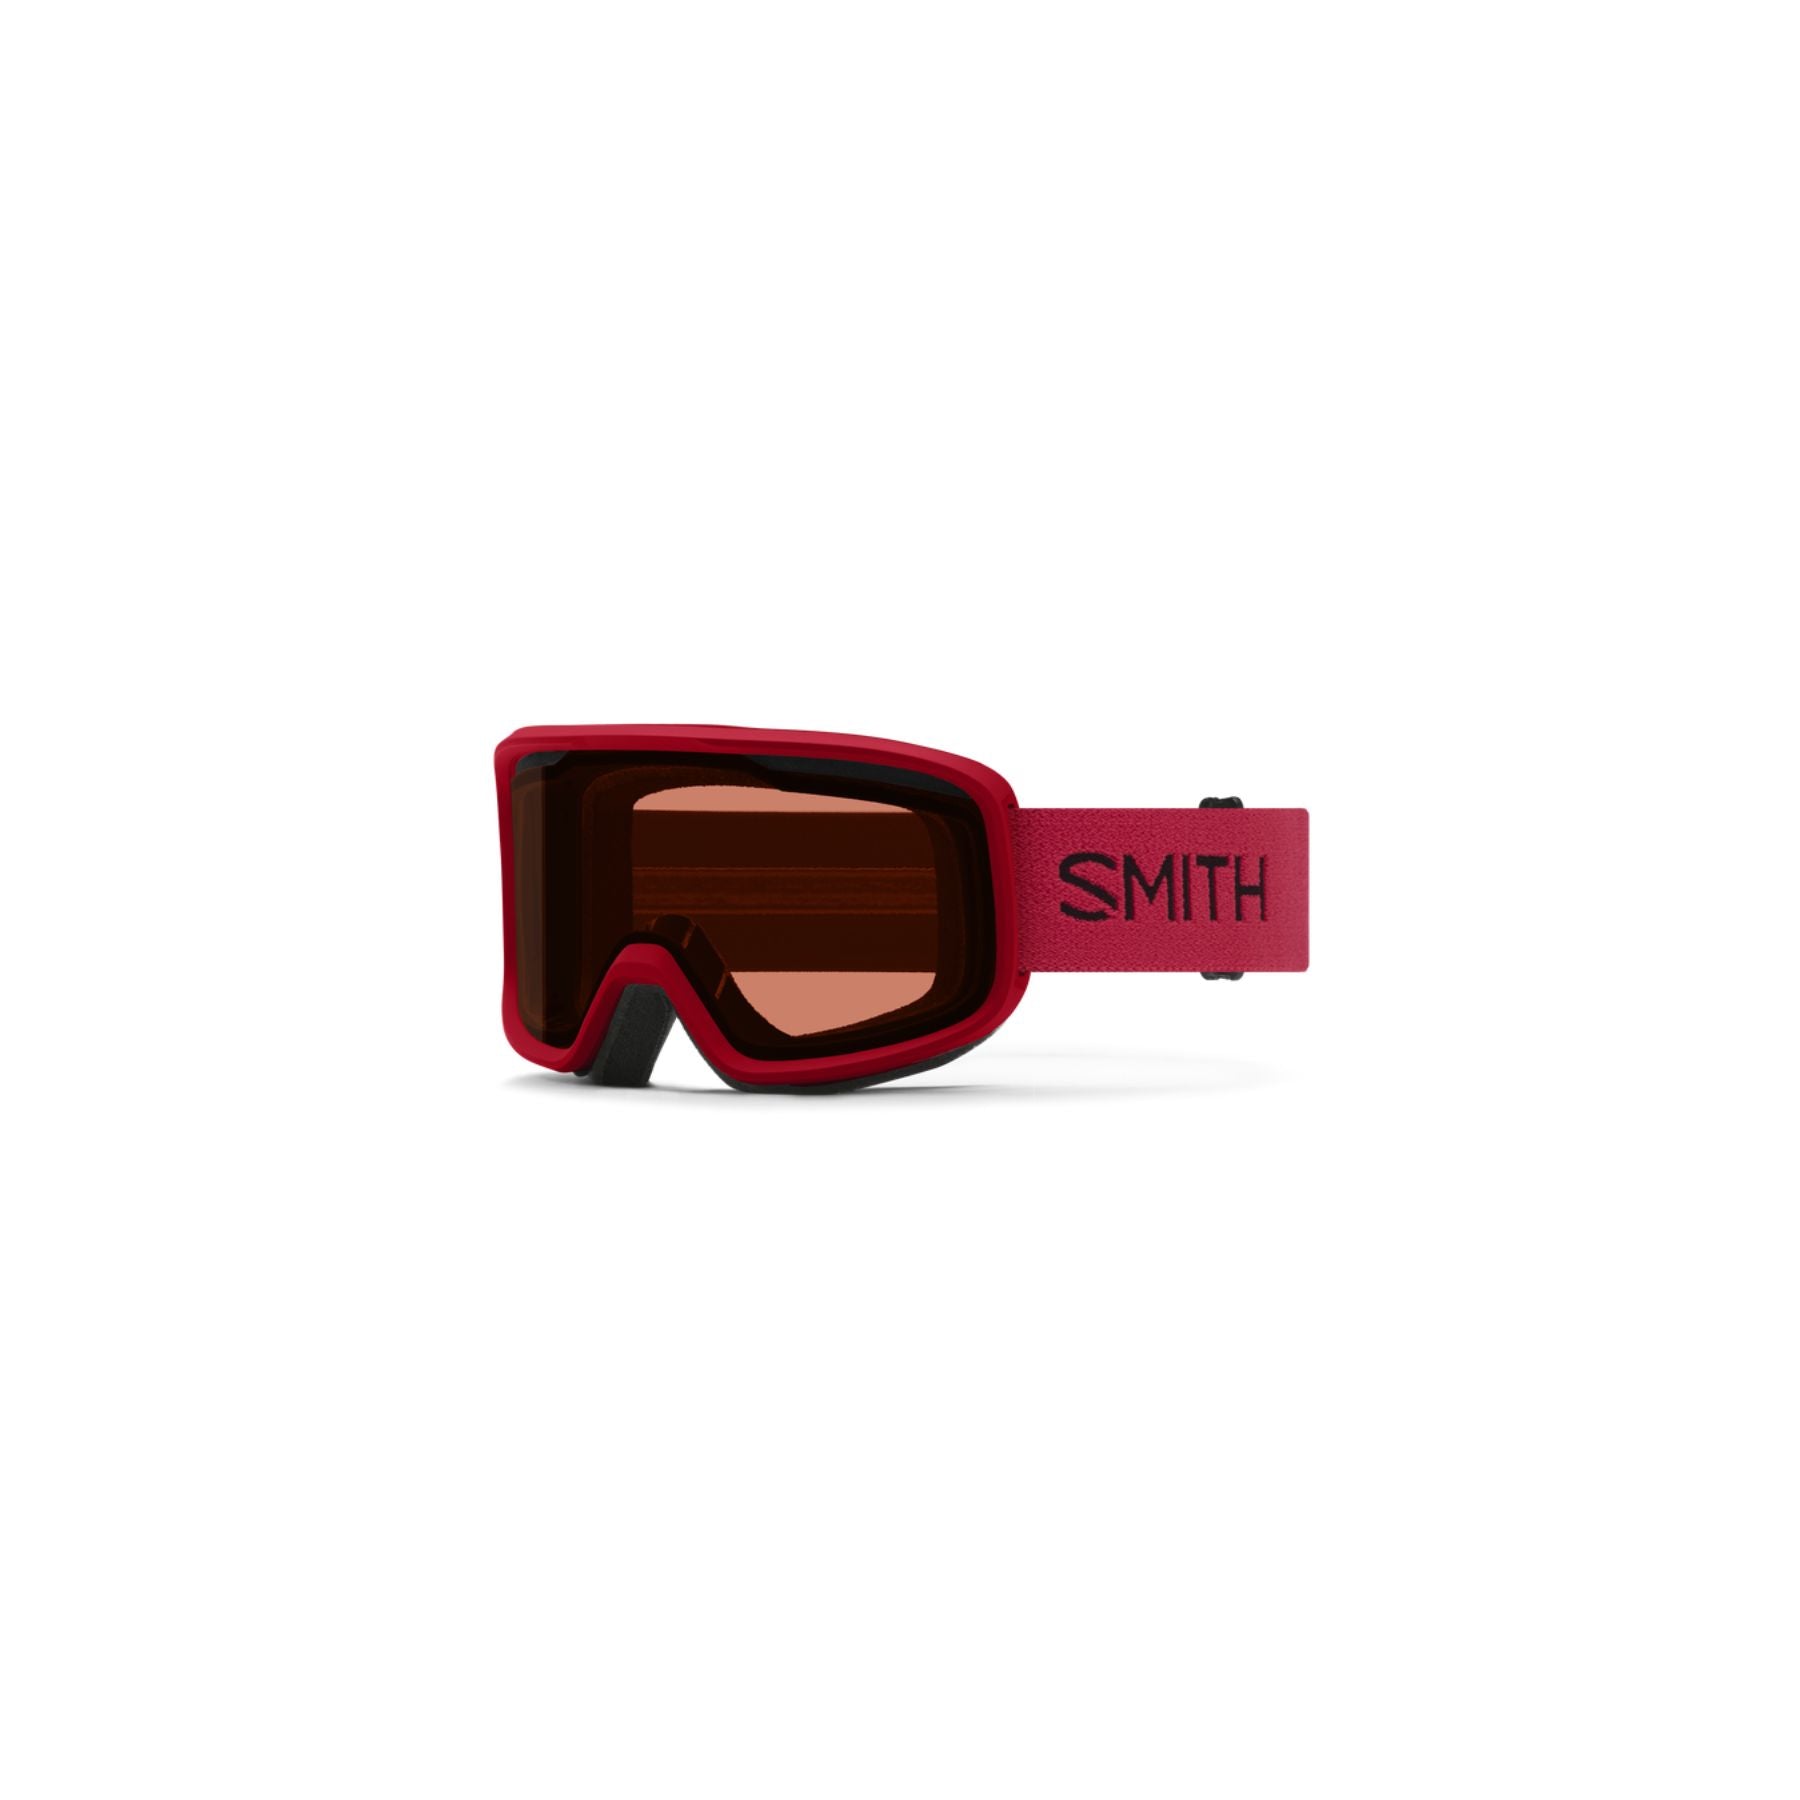 Smith Frontier Goggles in Crimson